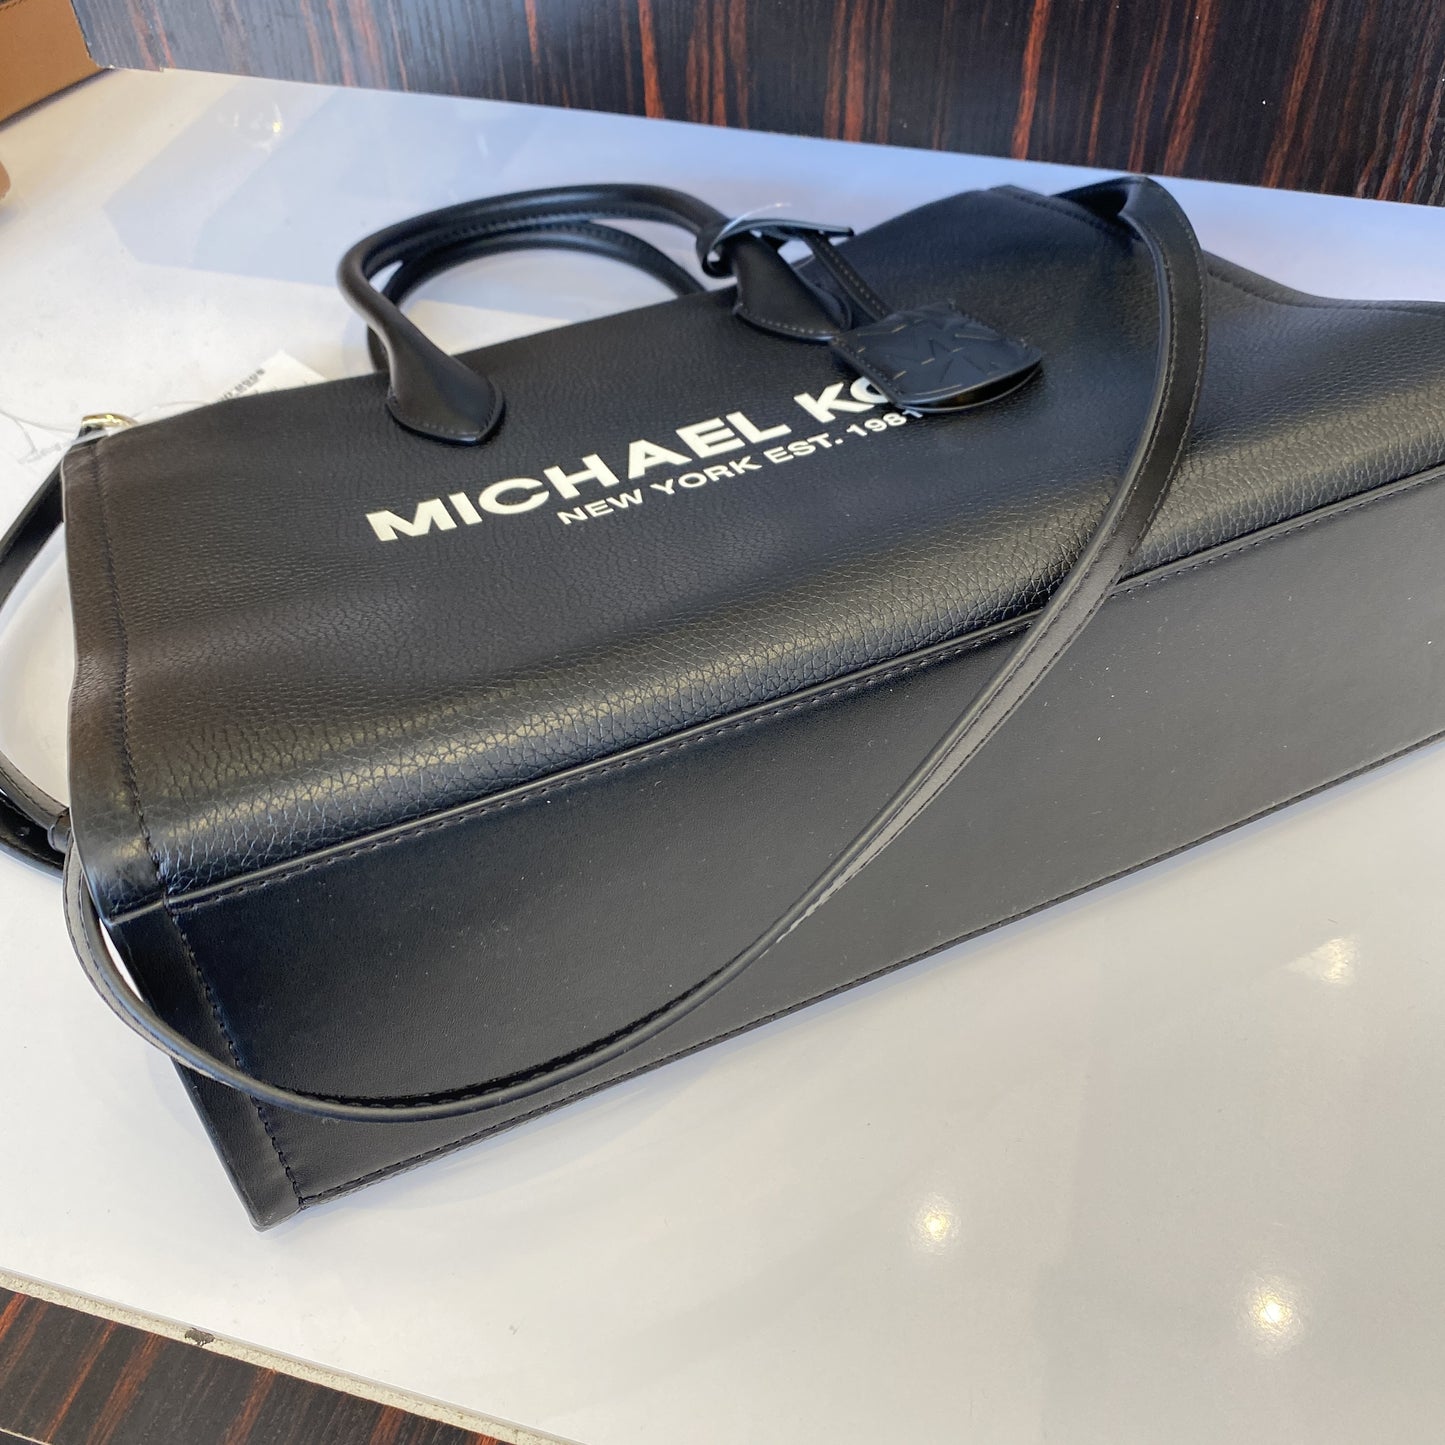 Michael Kors Medium Mirella Tote Bag - Black